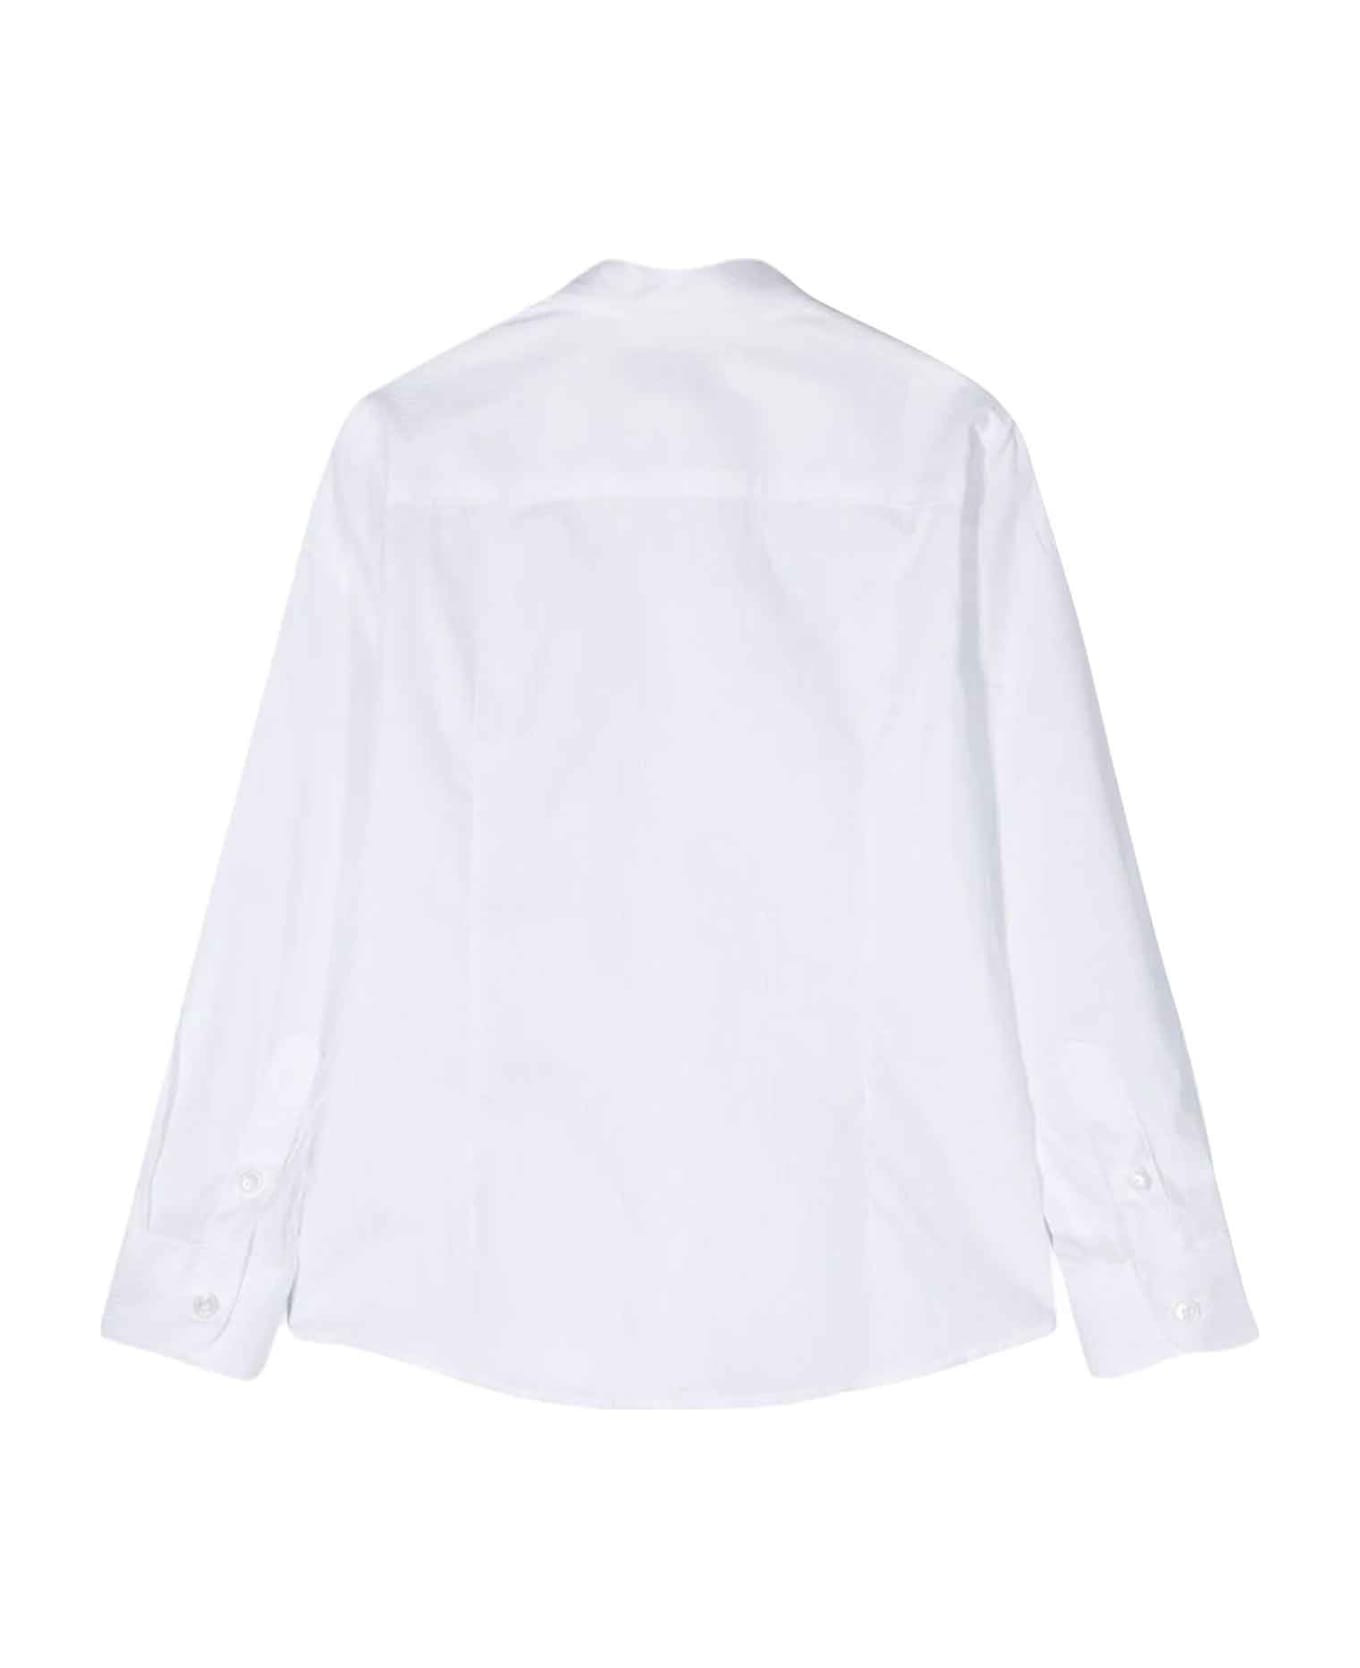 Paolo Pecora White Shirt Boy - Bianco シャツ